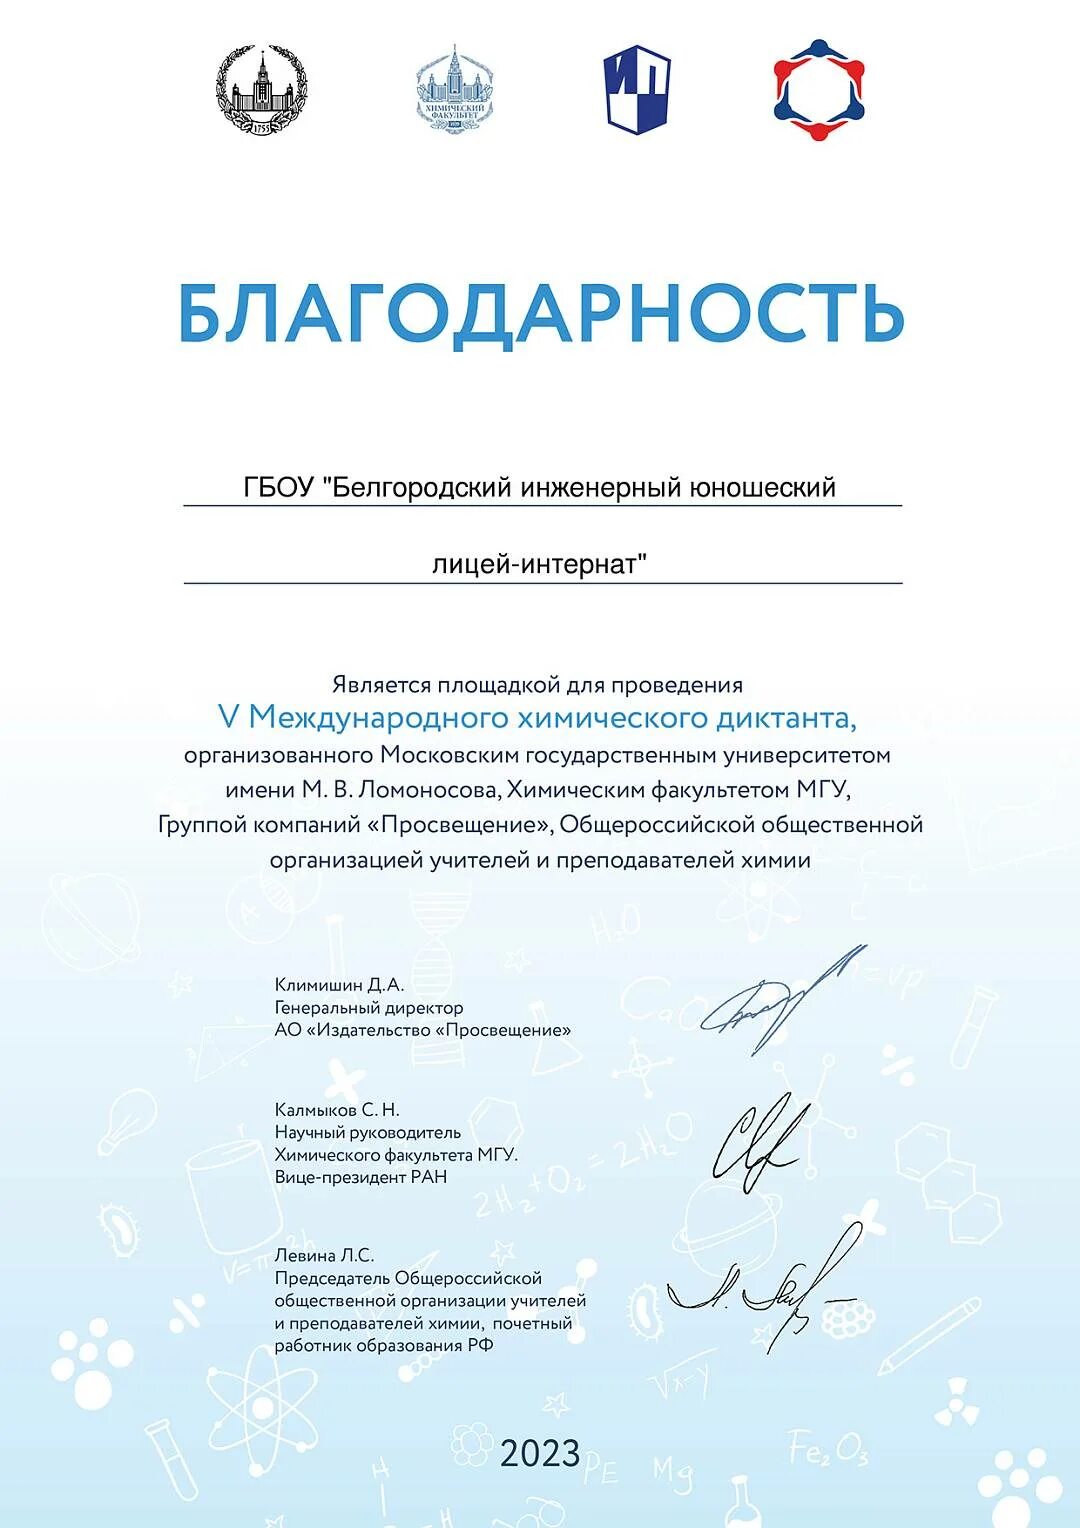 Сертификат диктанта 2023. Хим диктант. Химический диктант. Сертификат по химическому диктанту. Международный сертификат.